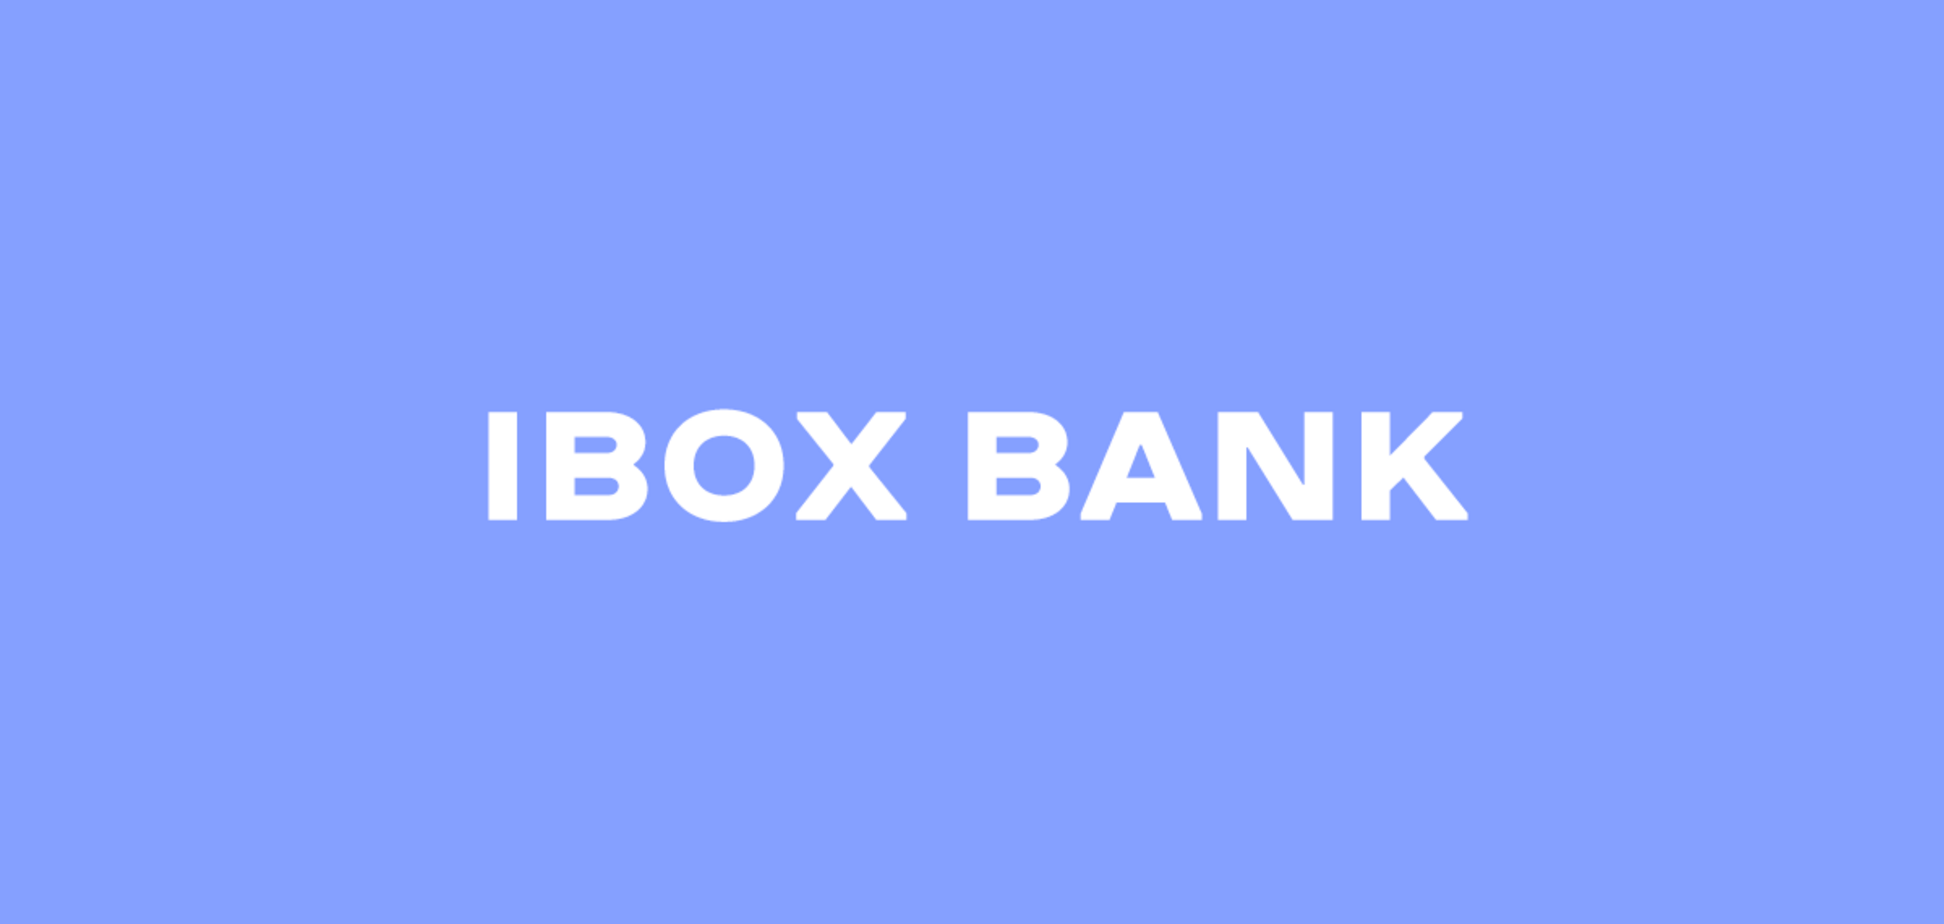 IBOX Bank увеличивает уставный капитал до 300 млн грн во II квартале 2021 года